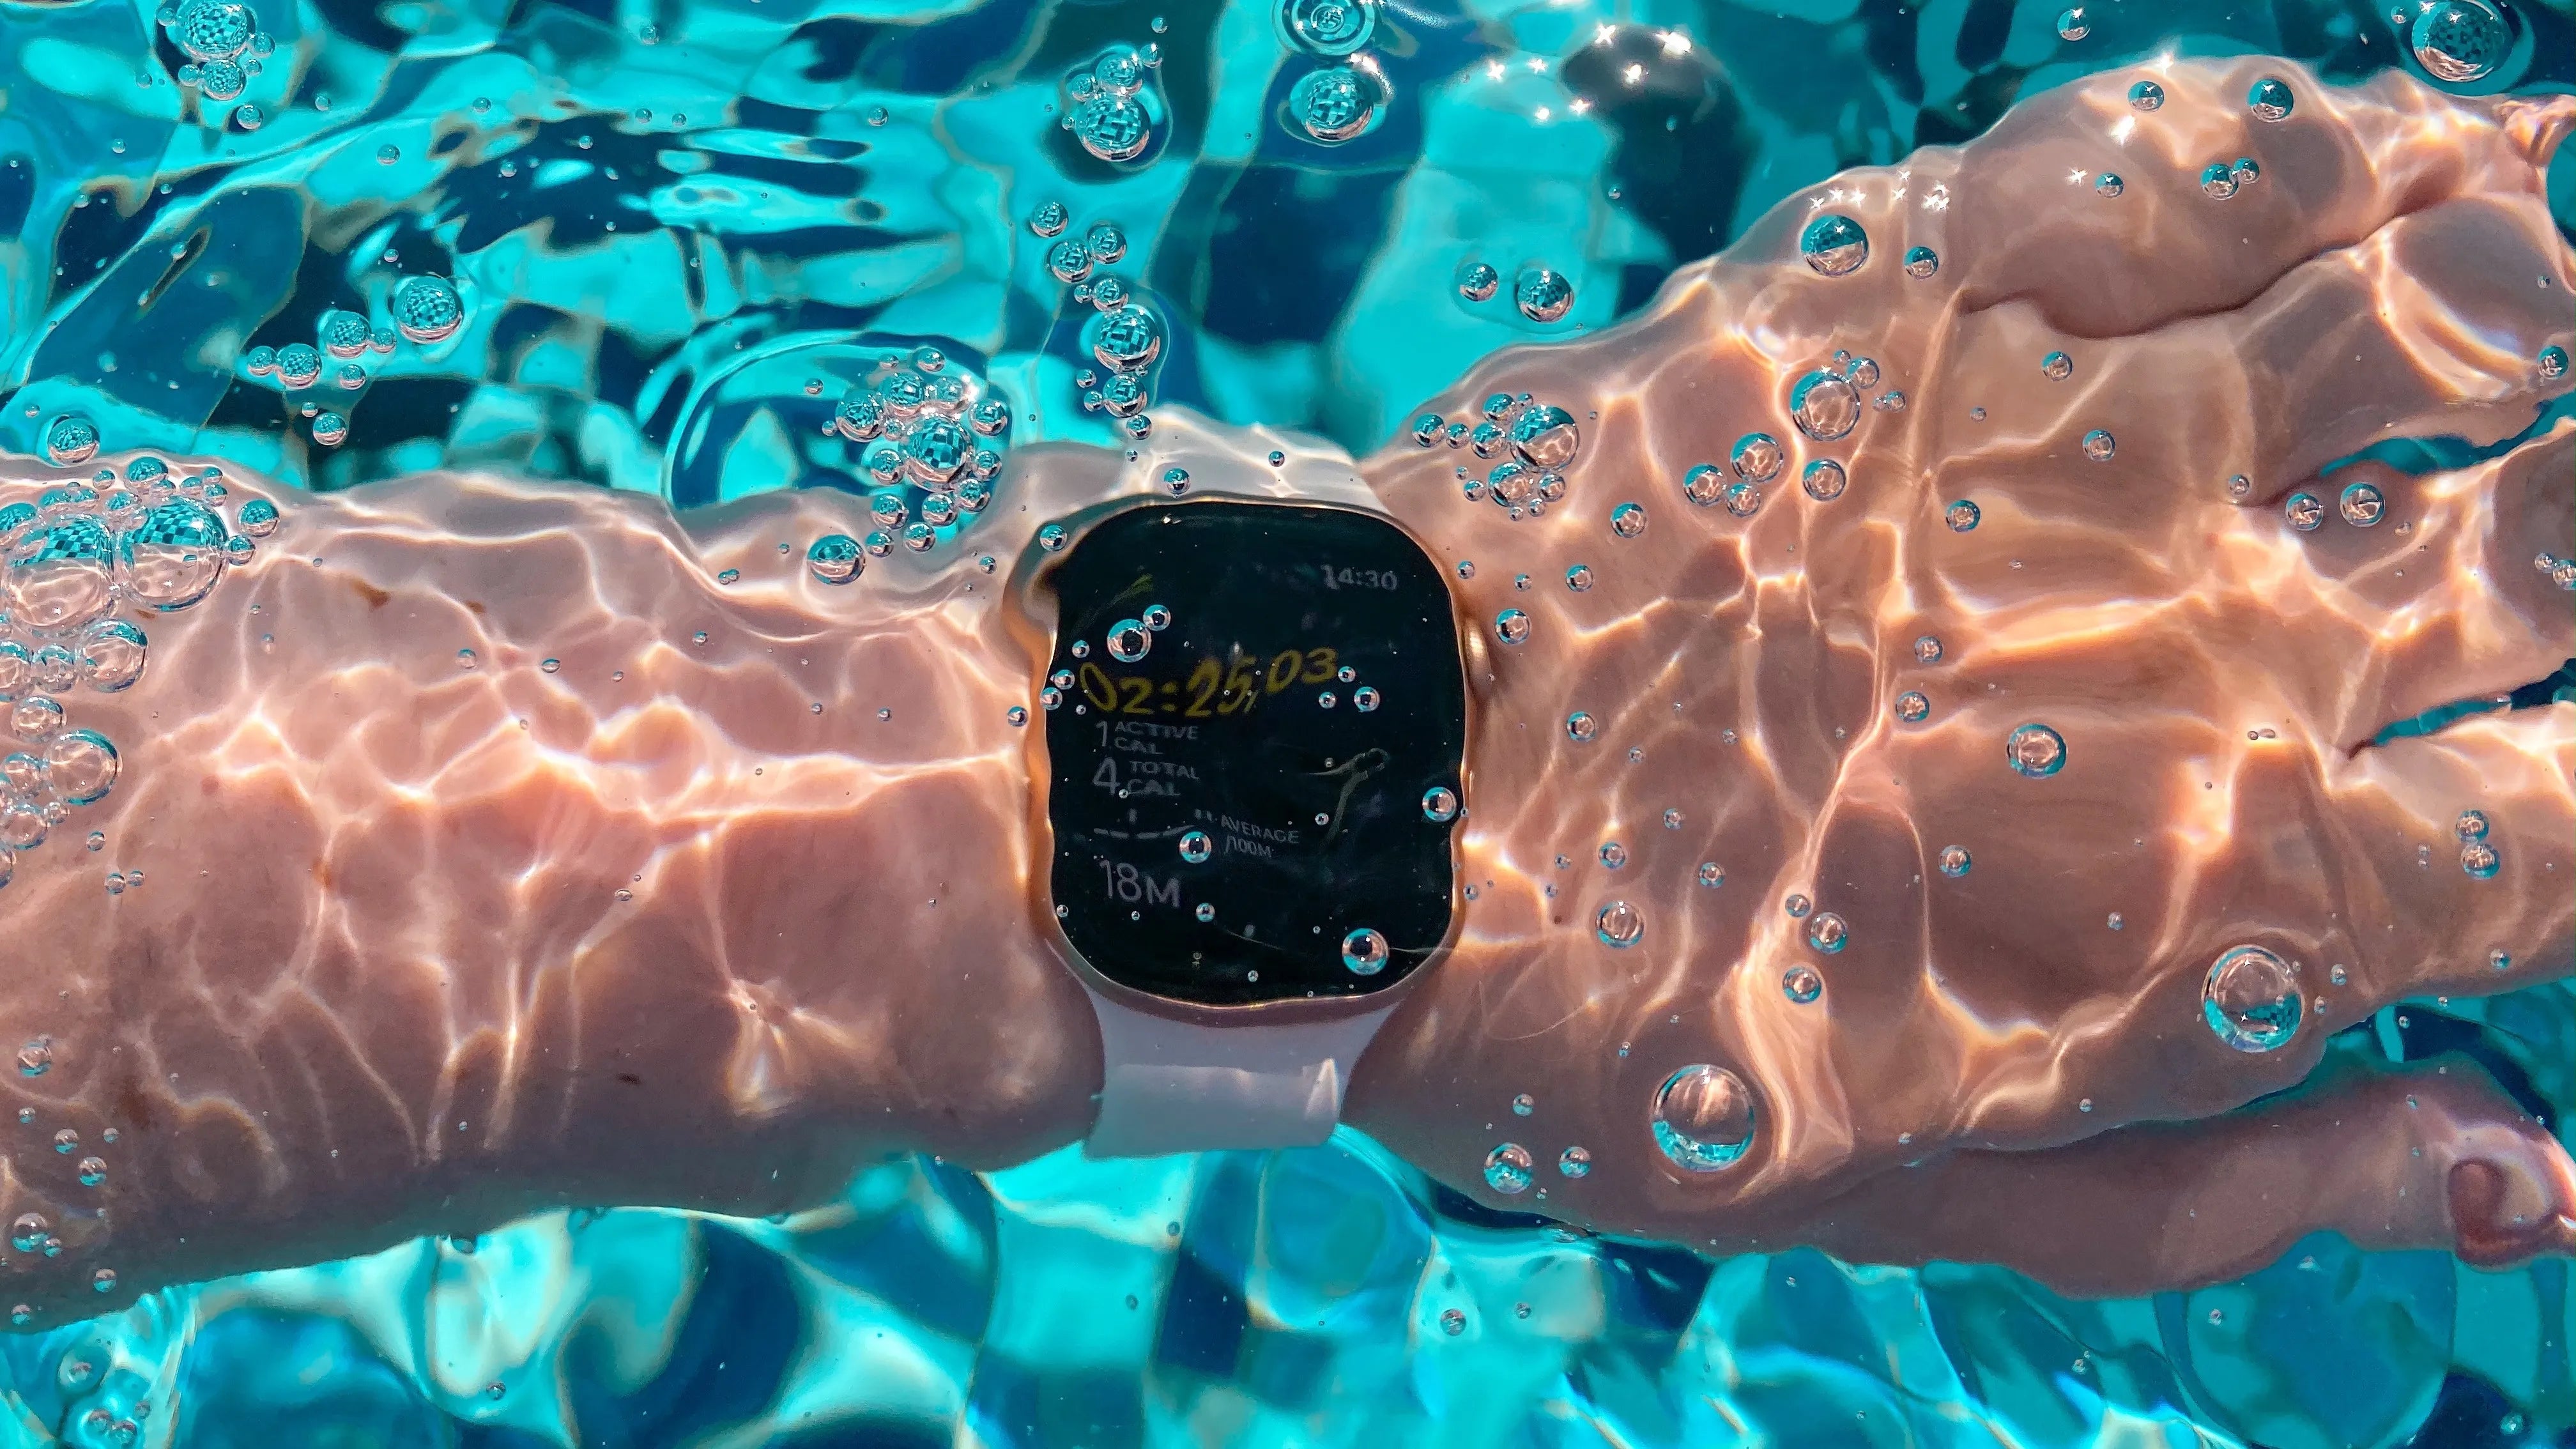 Is Apple Watch Waterproof - Underwater Image of Apple Watch